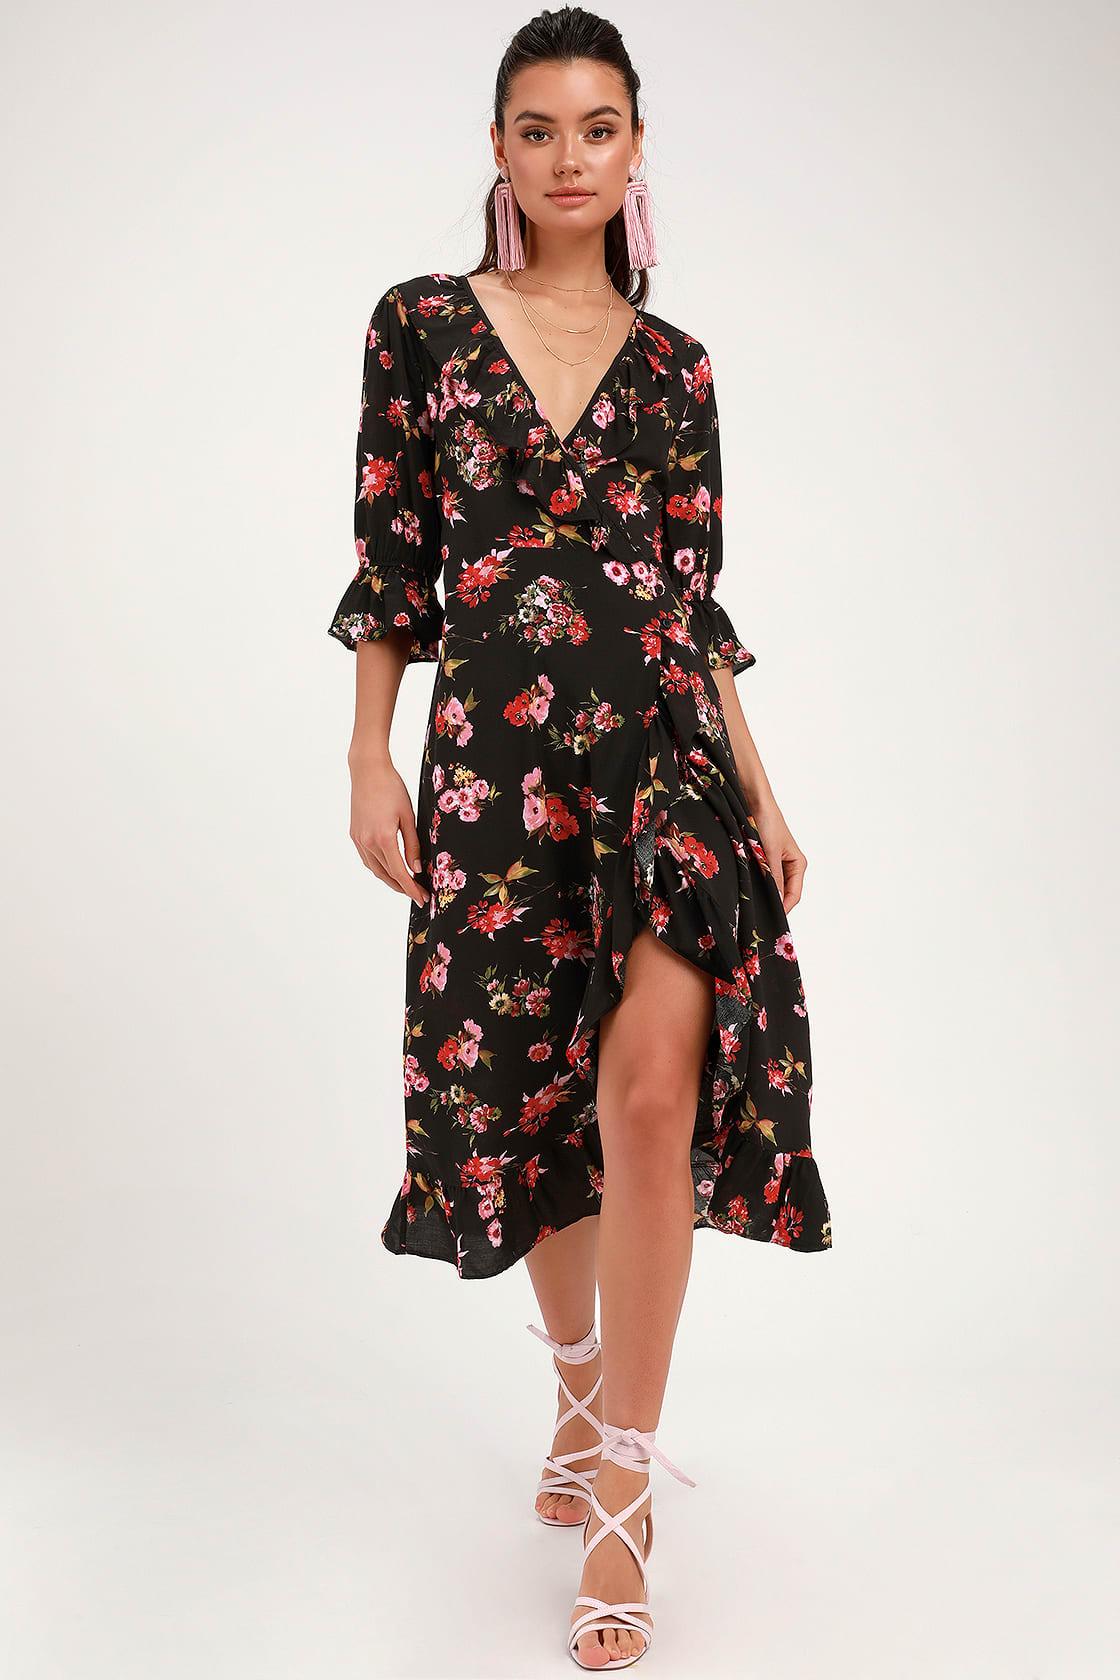 Cute Black Wrap Dress - Ruffled Midi Dress - Floral Print Dress - Lulus